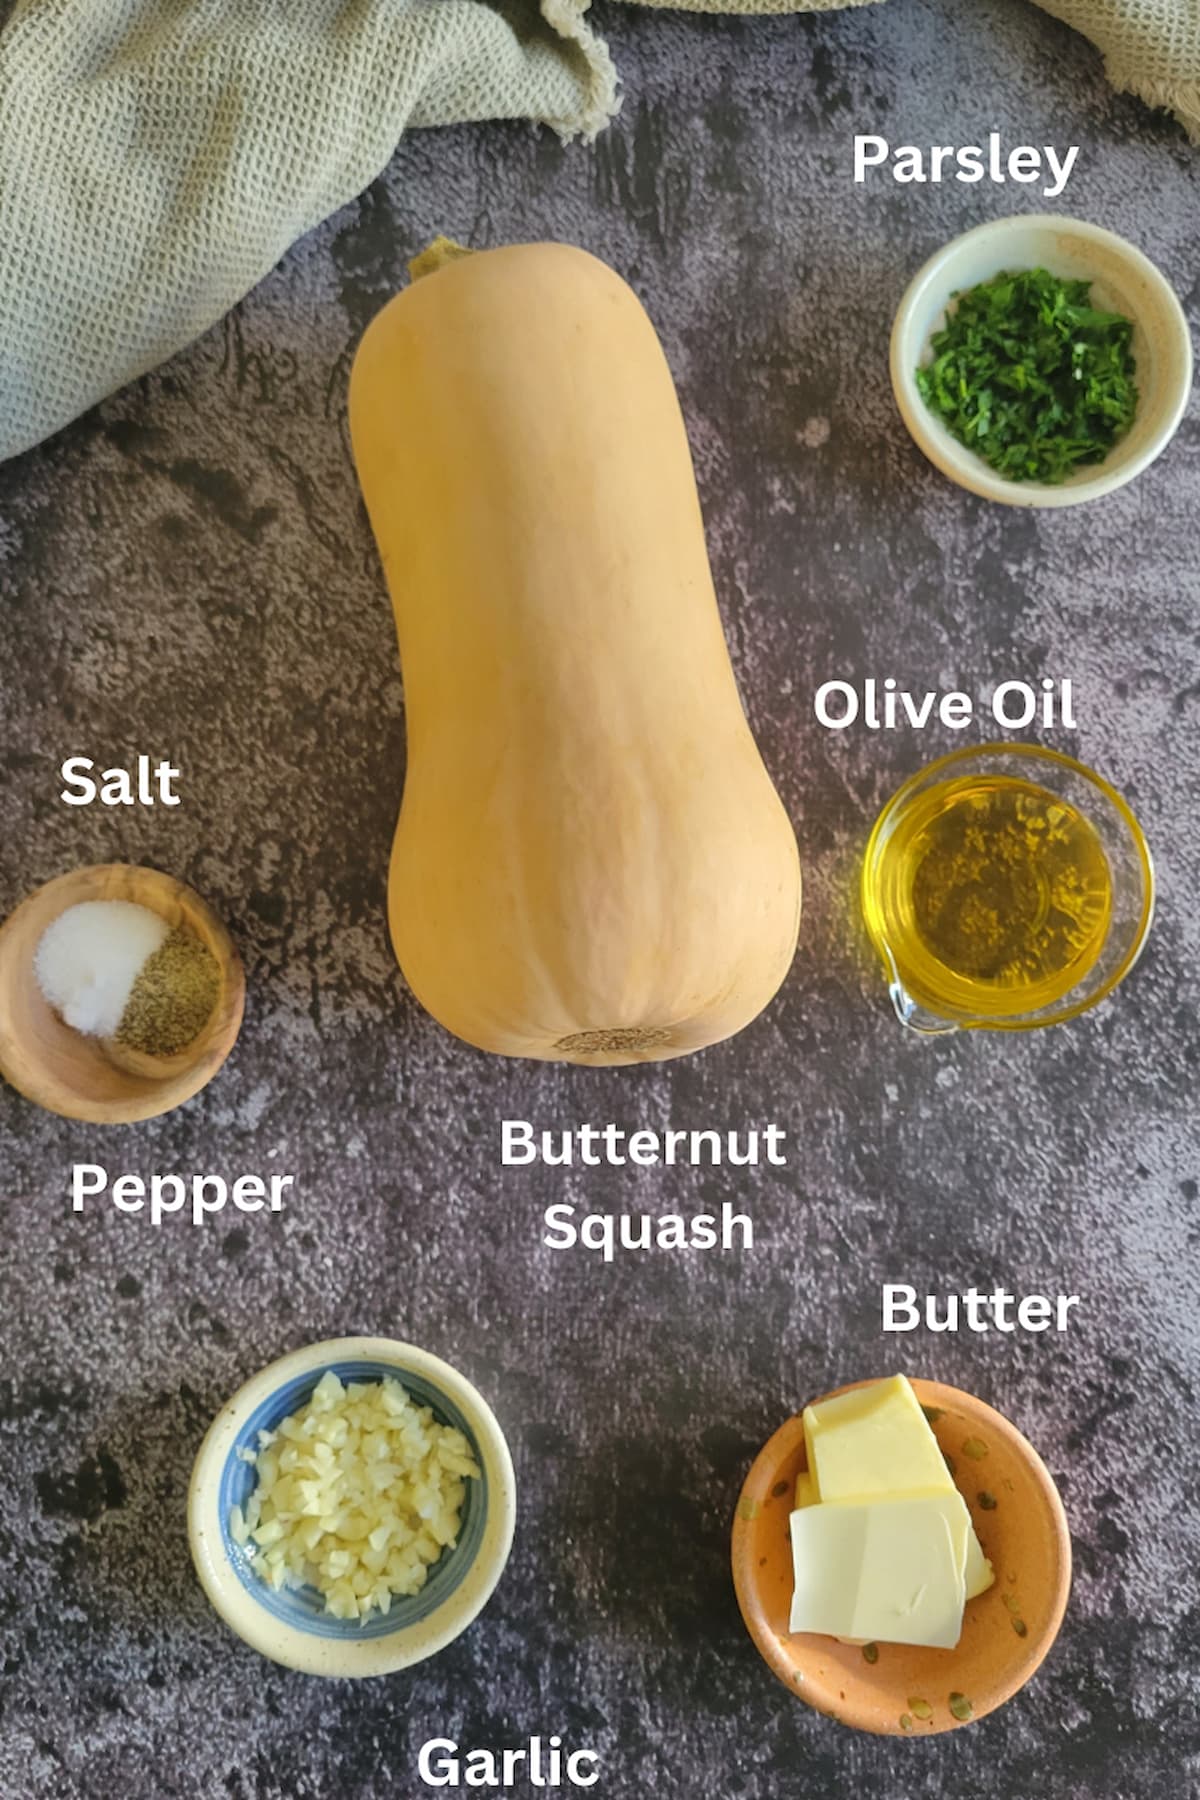 ingredients for roasted butternut squash - butternut squash, garlic, parsley, olive oil, butter, salt, pepper